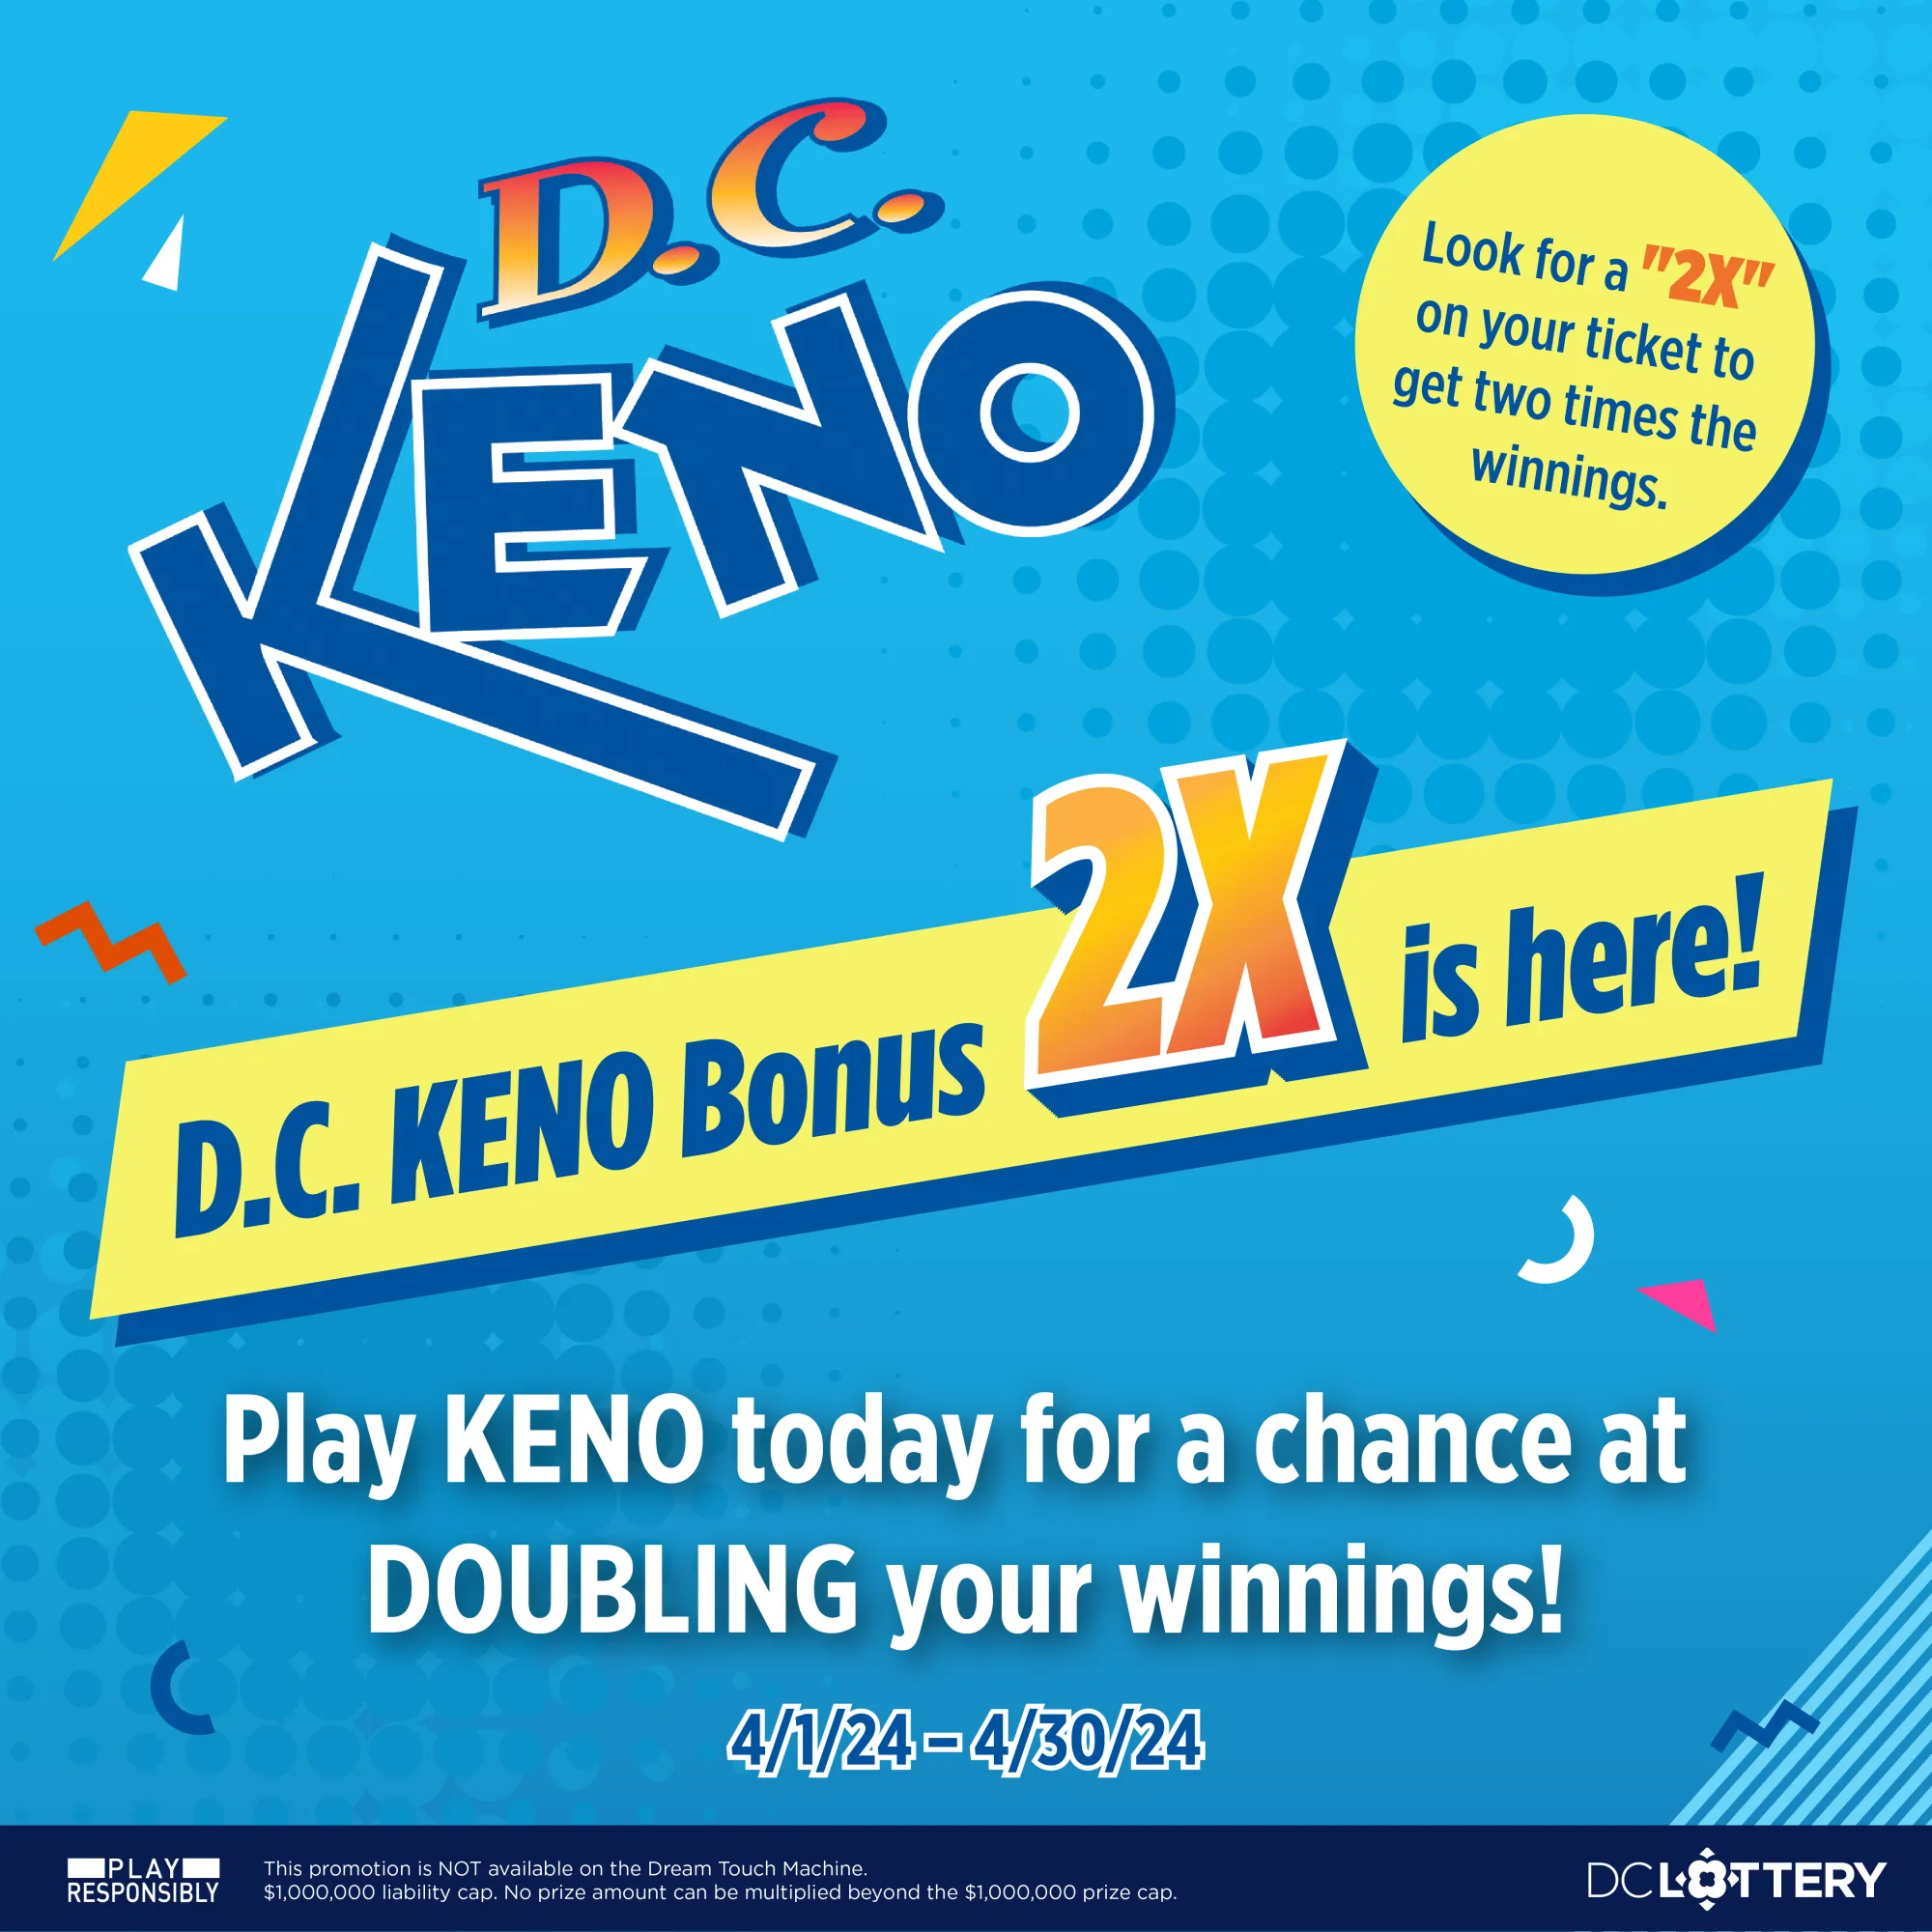 D.C. Keno Bonus 2X Promotion